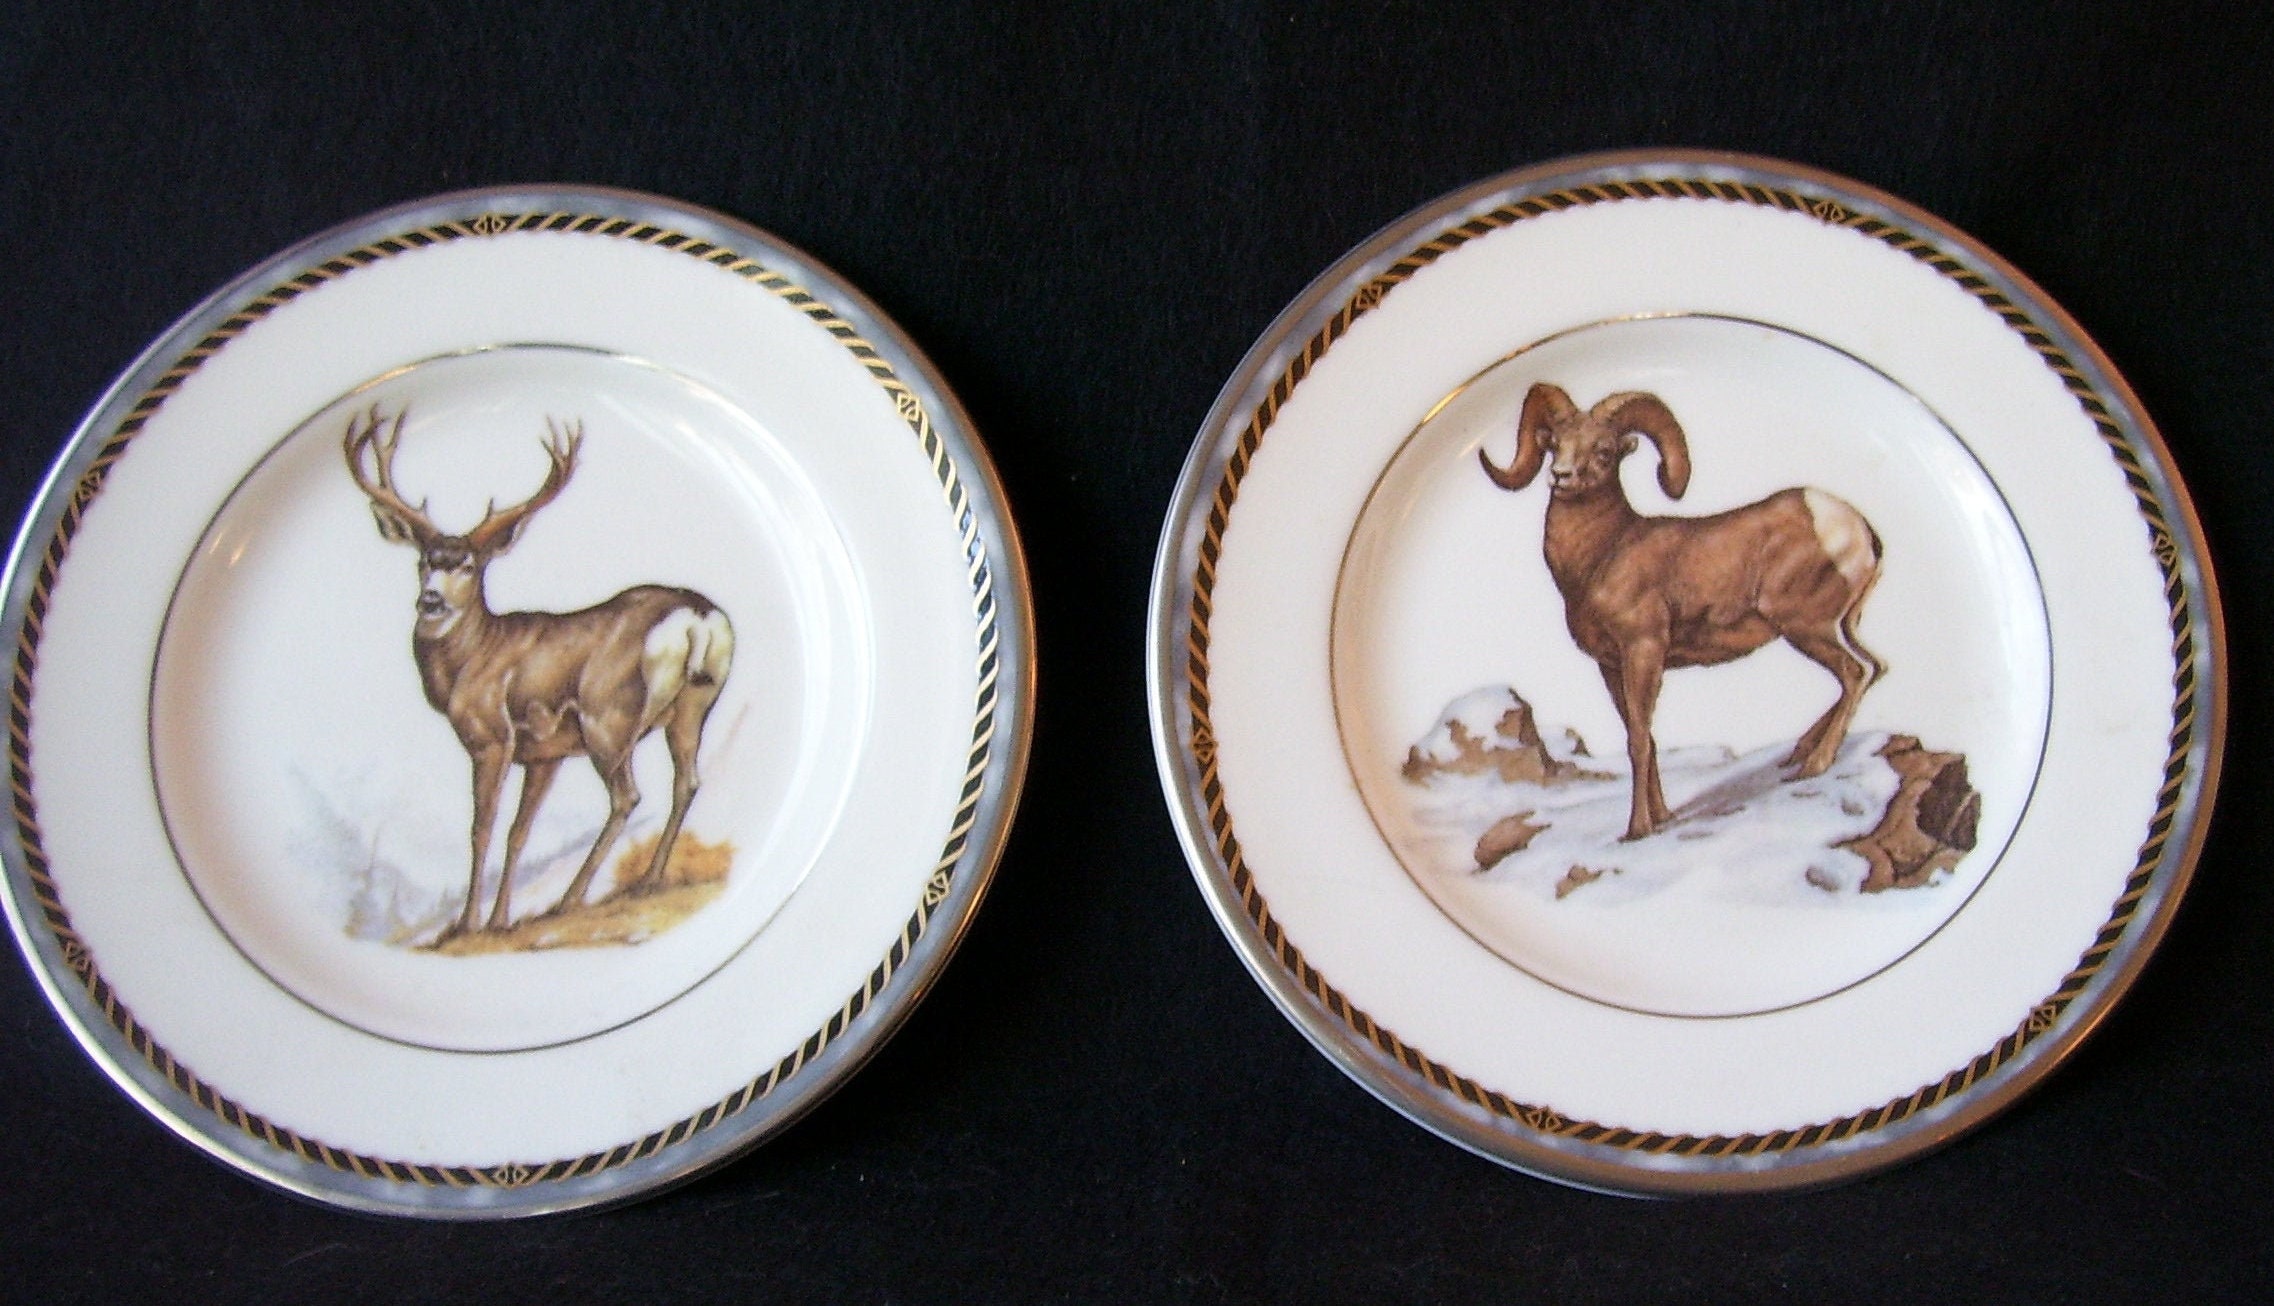 2 Royal Doulton New Romance Animal Plates - South Hampton -Small Cabinet Plates- Stag & Ram 1995